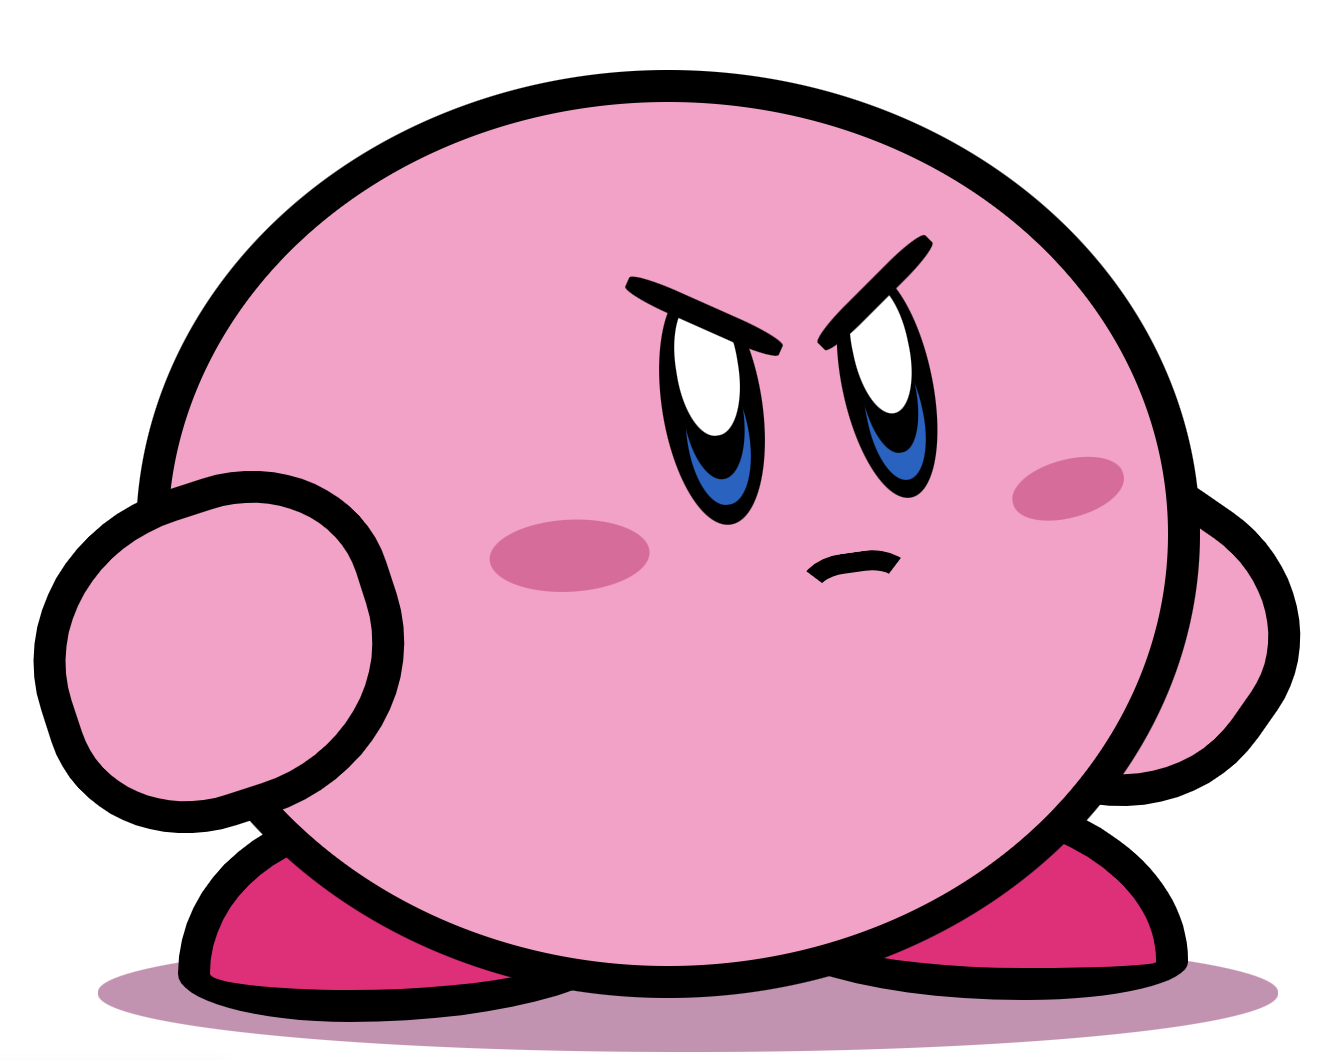 Kirby entire arm